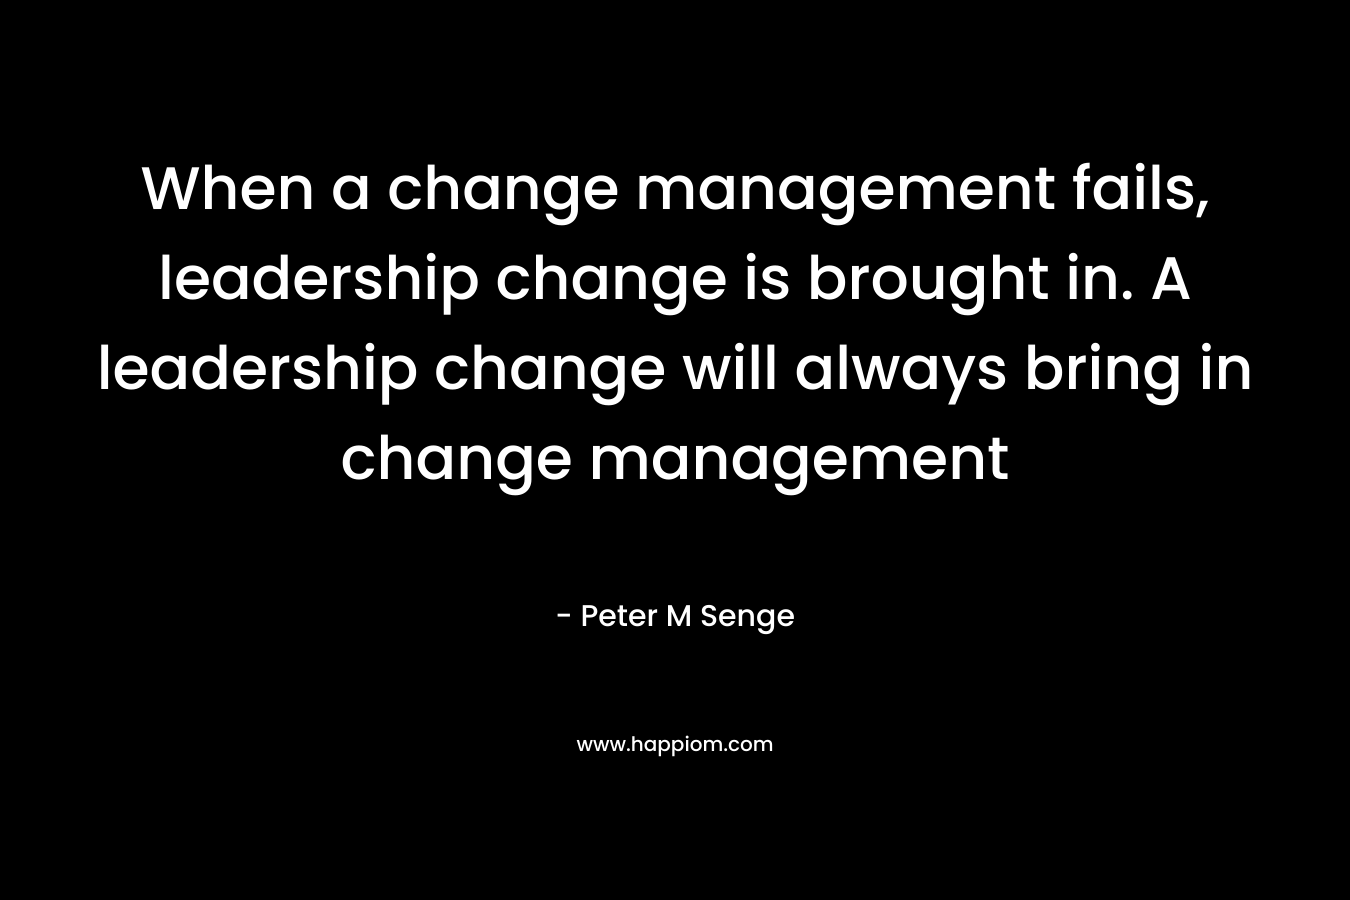 When a change management fails, leadership change is brought in. A leadership change will always bring in change management